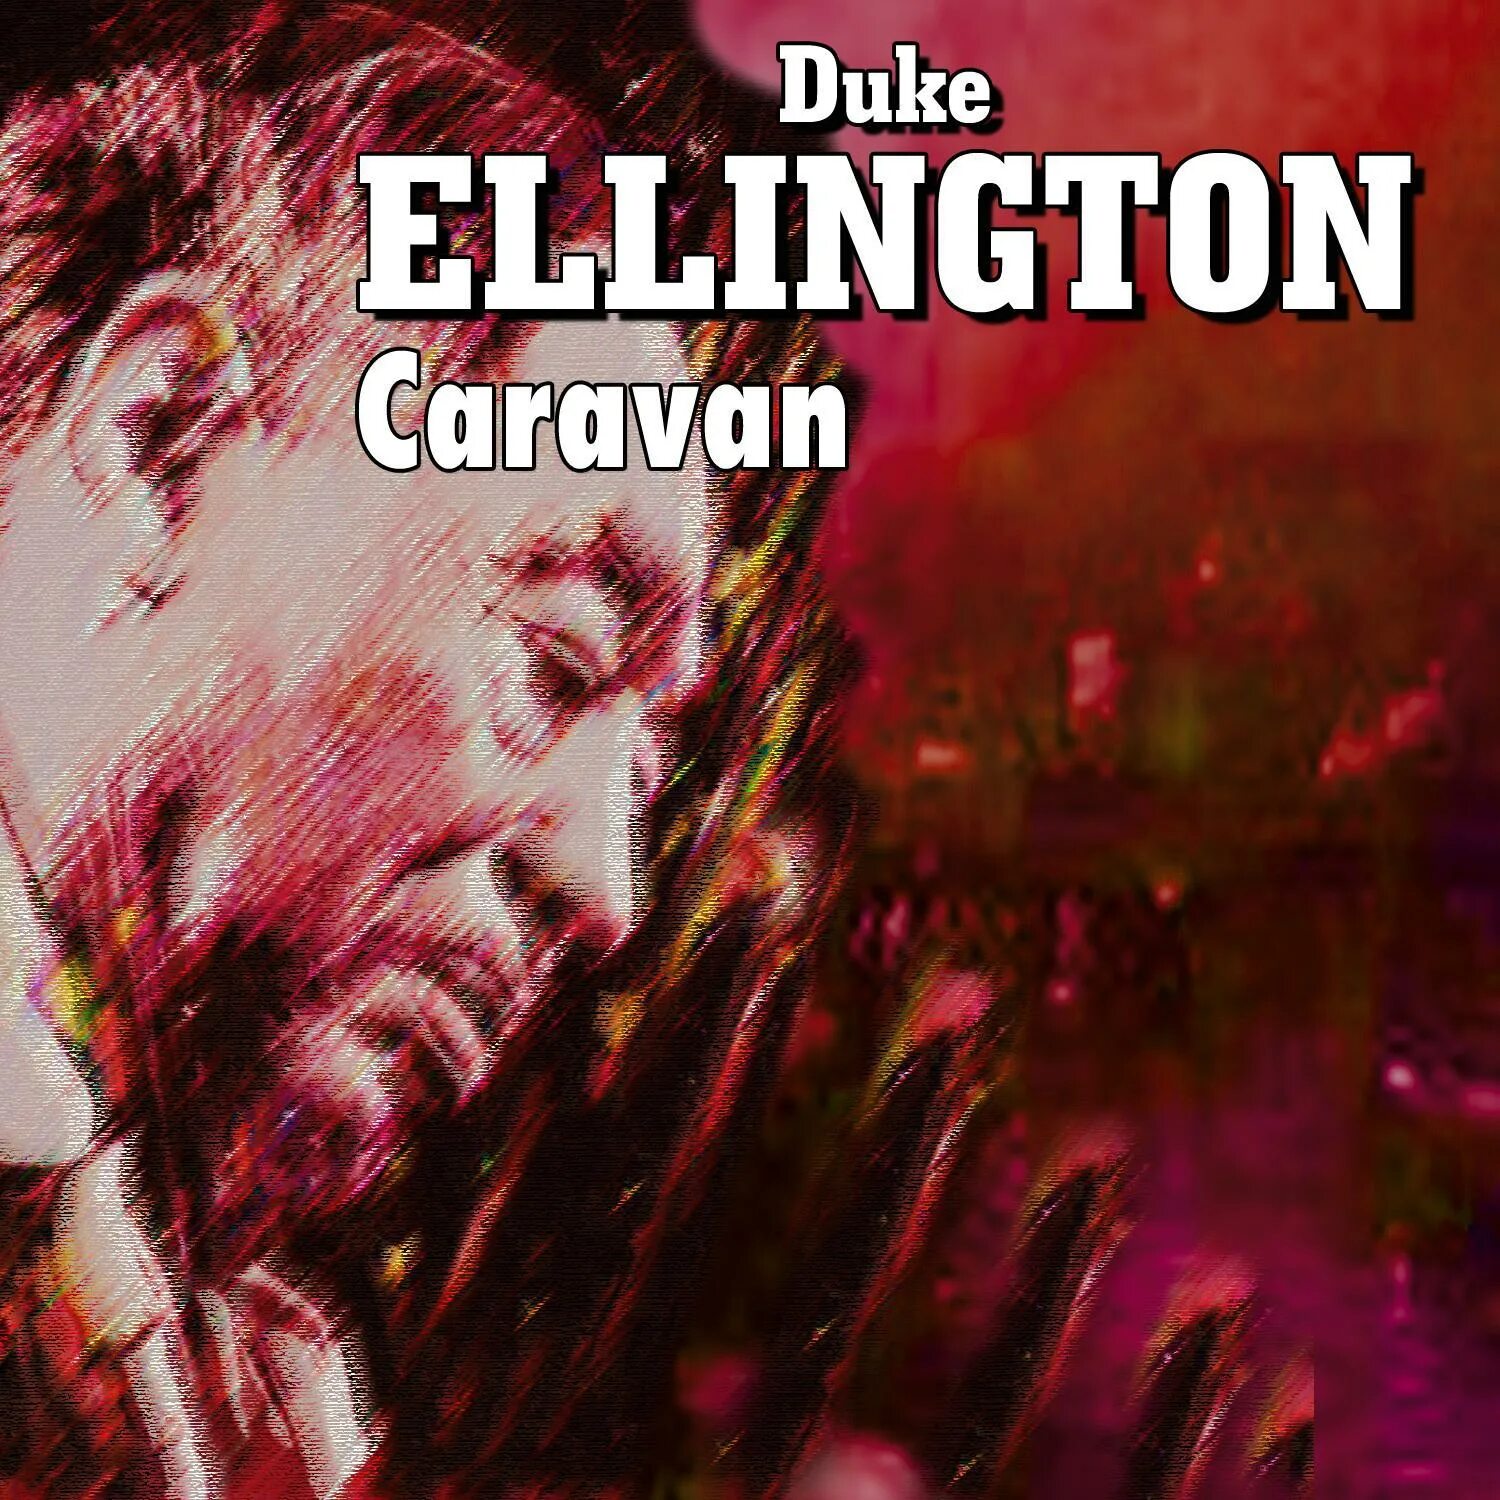 Дюк эллингтон караван. Duke Ellington Caravan. Дюк Эллингтон Караван слушать. Chad lb - Caravan (Duke Ellington - Juan Tizol) (256 Kbps).